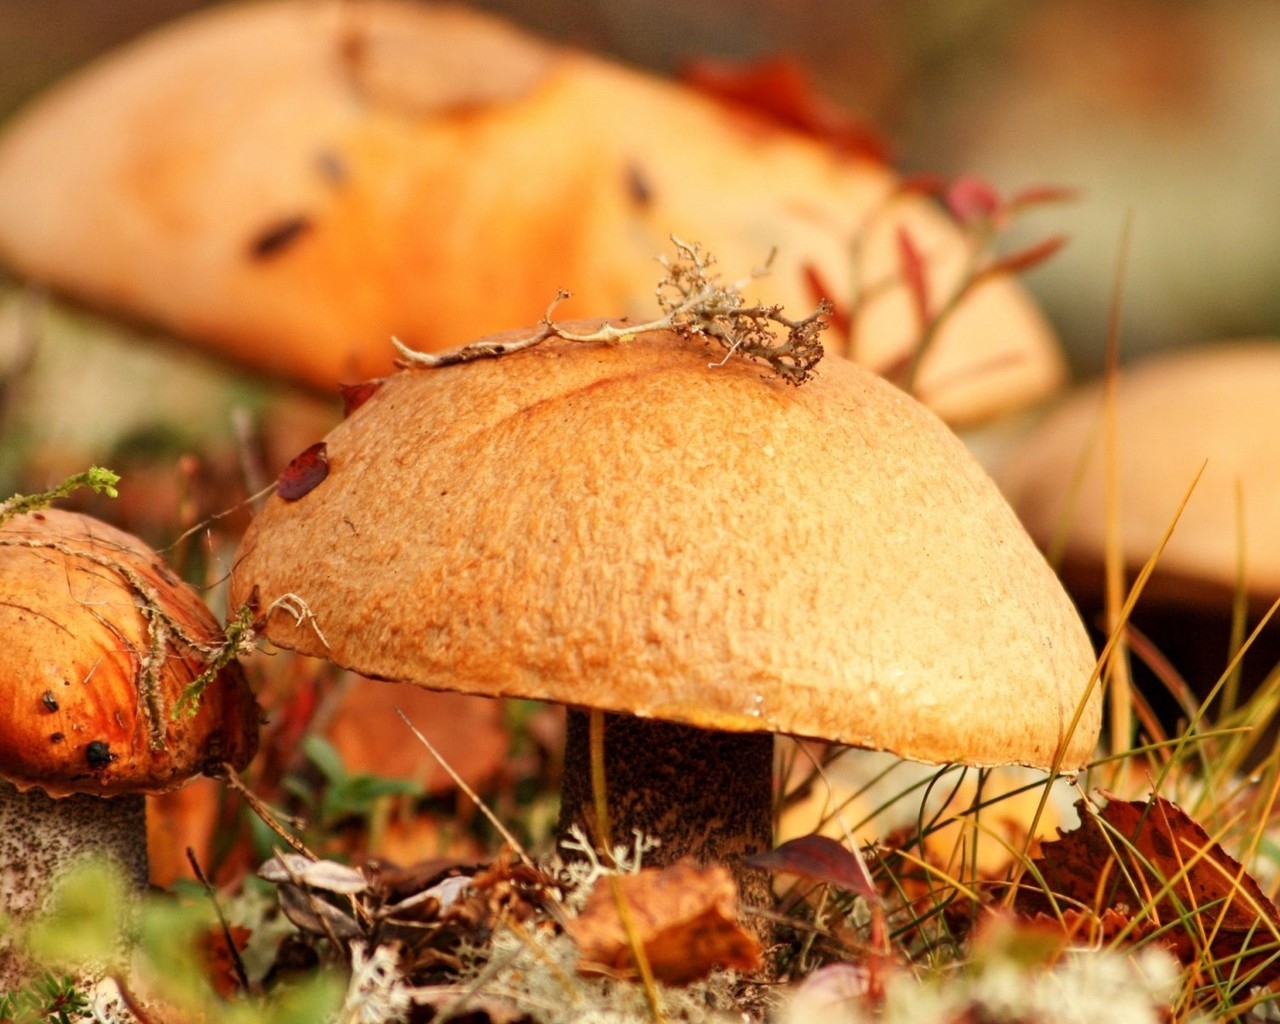 Wilde Mushrooms for 1280 x 1024 resolution